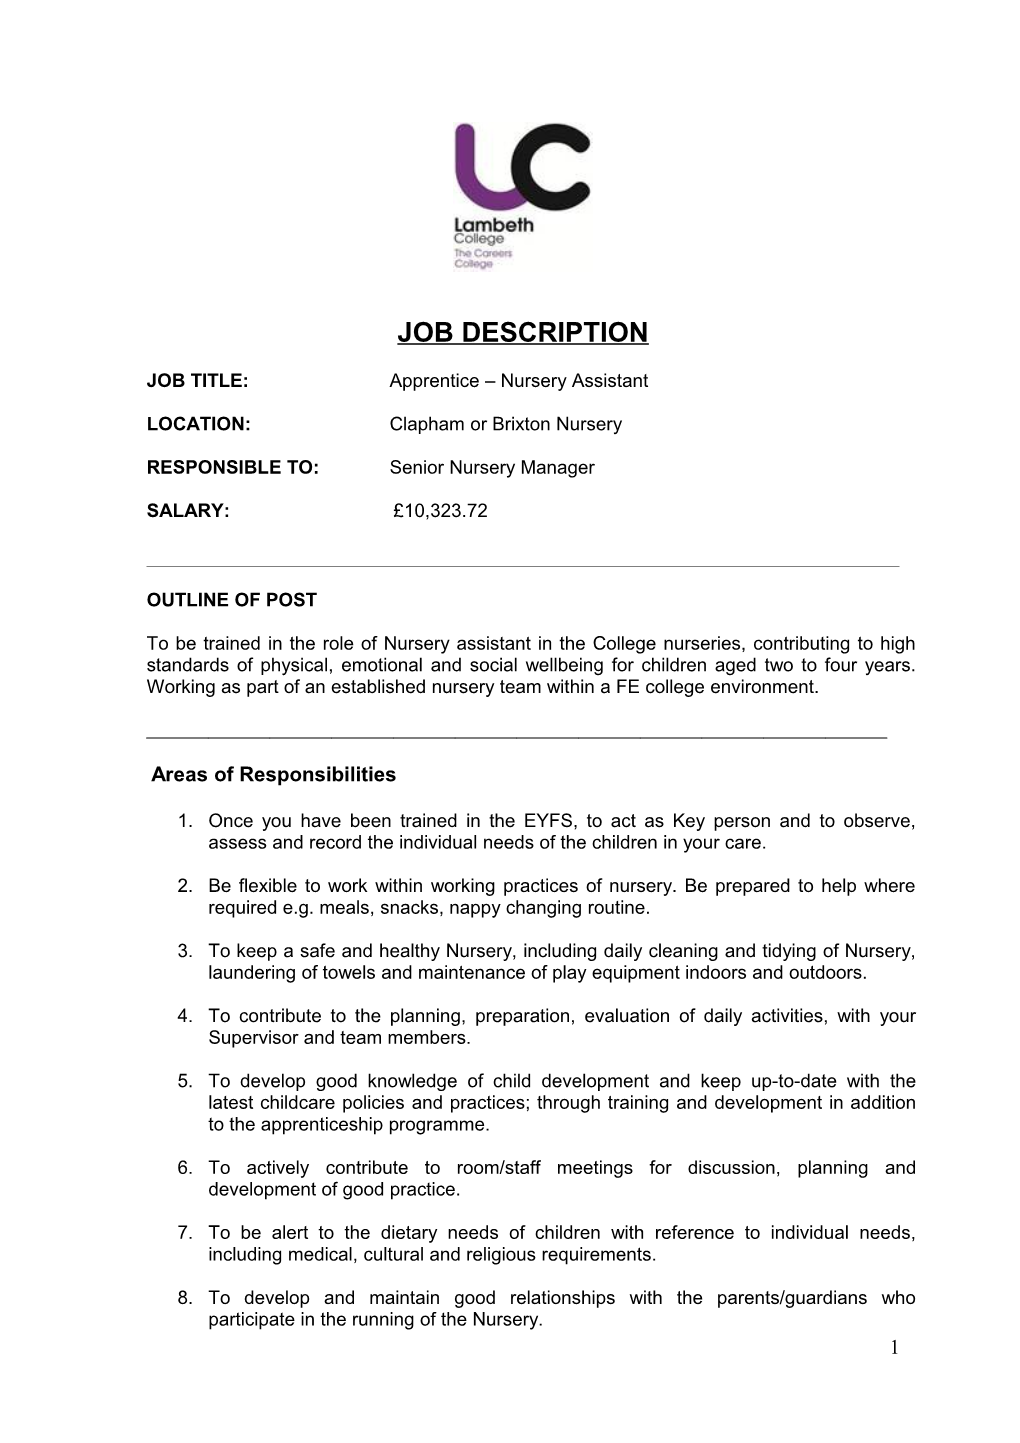 Centre Office Staff : Job Description and Person Specification